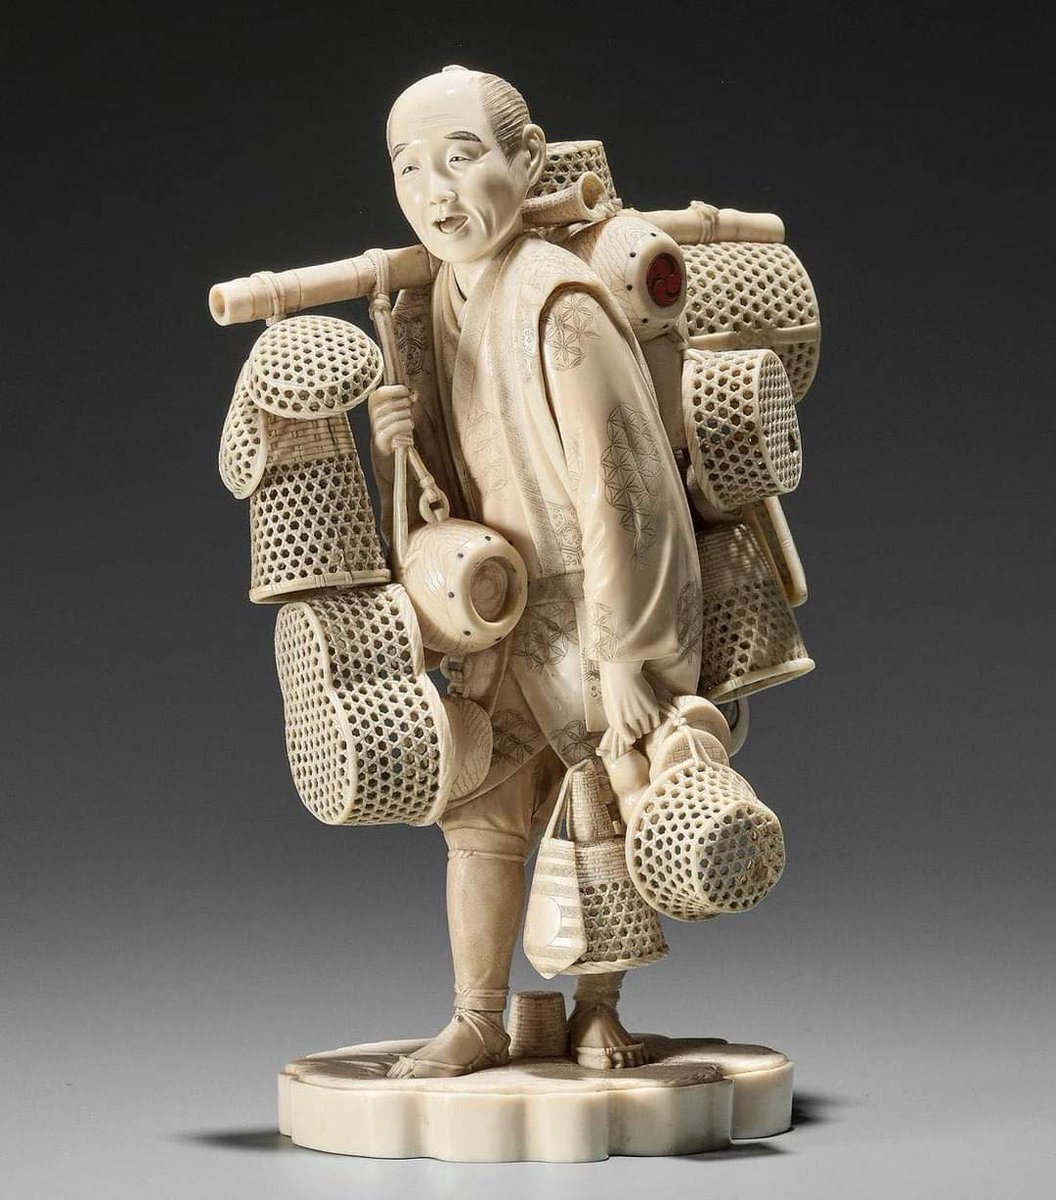 #vintagestyle #vintagephotography #vintagefashion  #vintagefashionillustration #vintagephotographer 

Ivory carving of a man selling baskets. Japan, Meiji period, 1868-1912